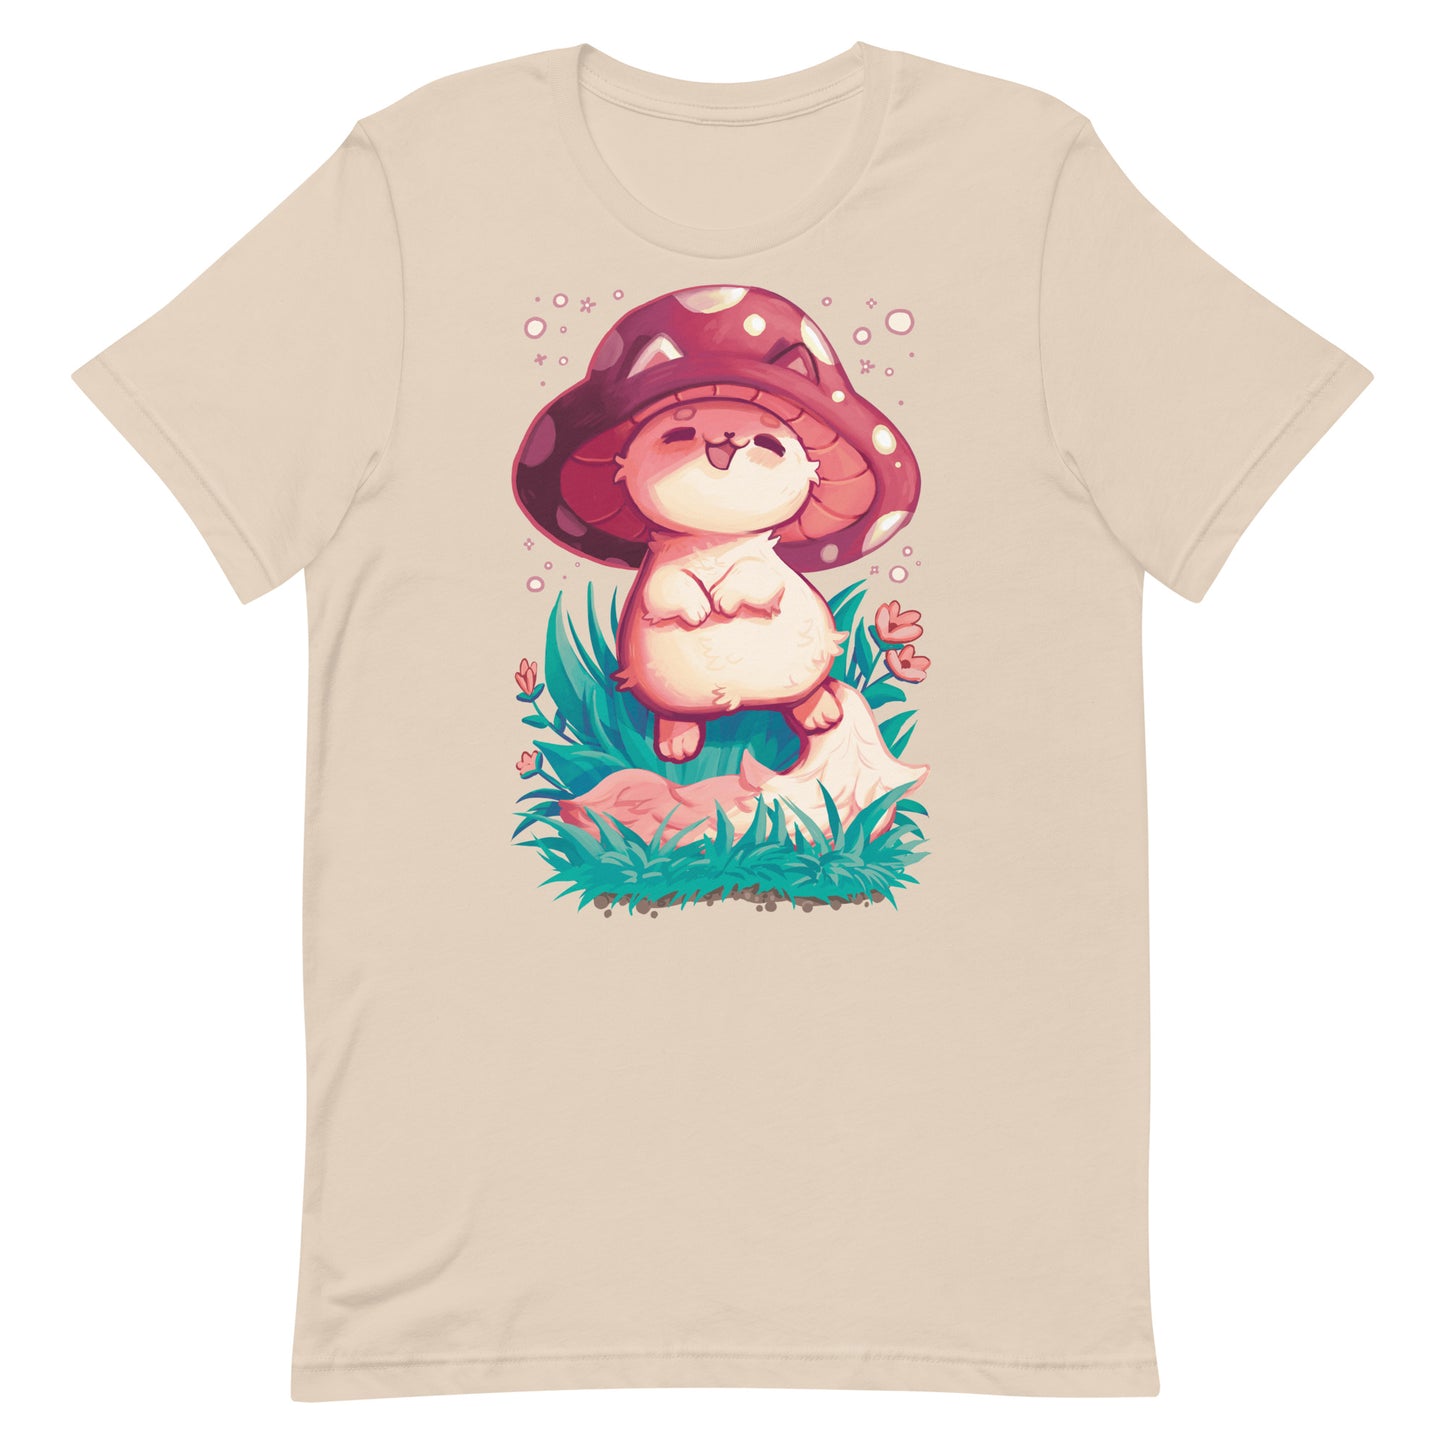 Meowshroom Unisex T-Shirt by The Shirt Hoard